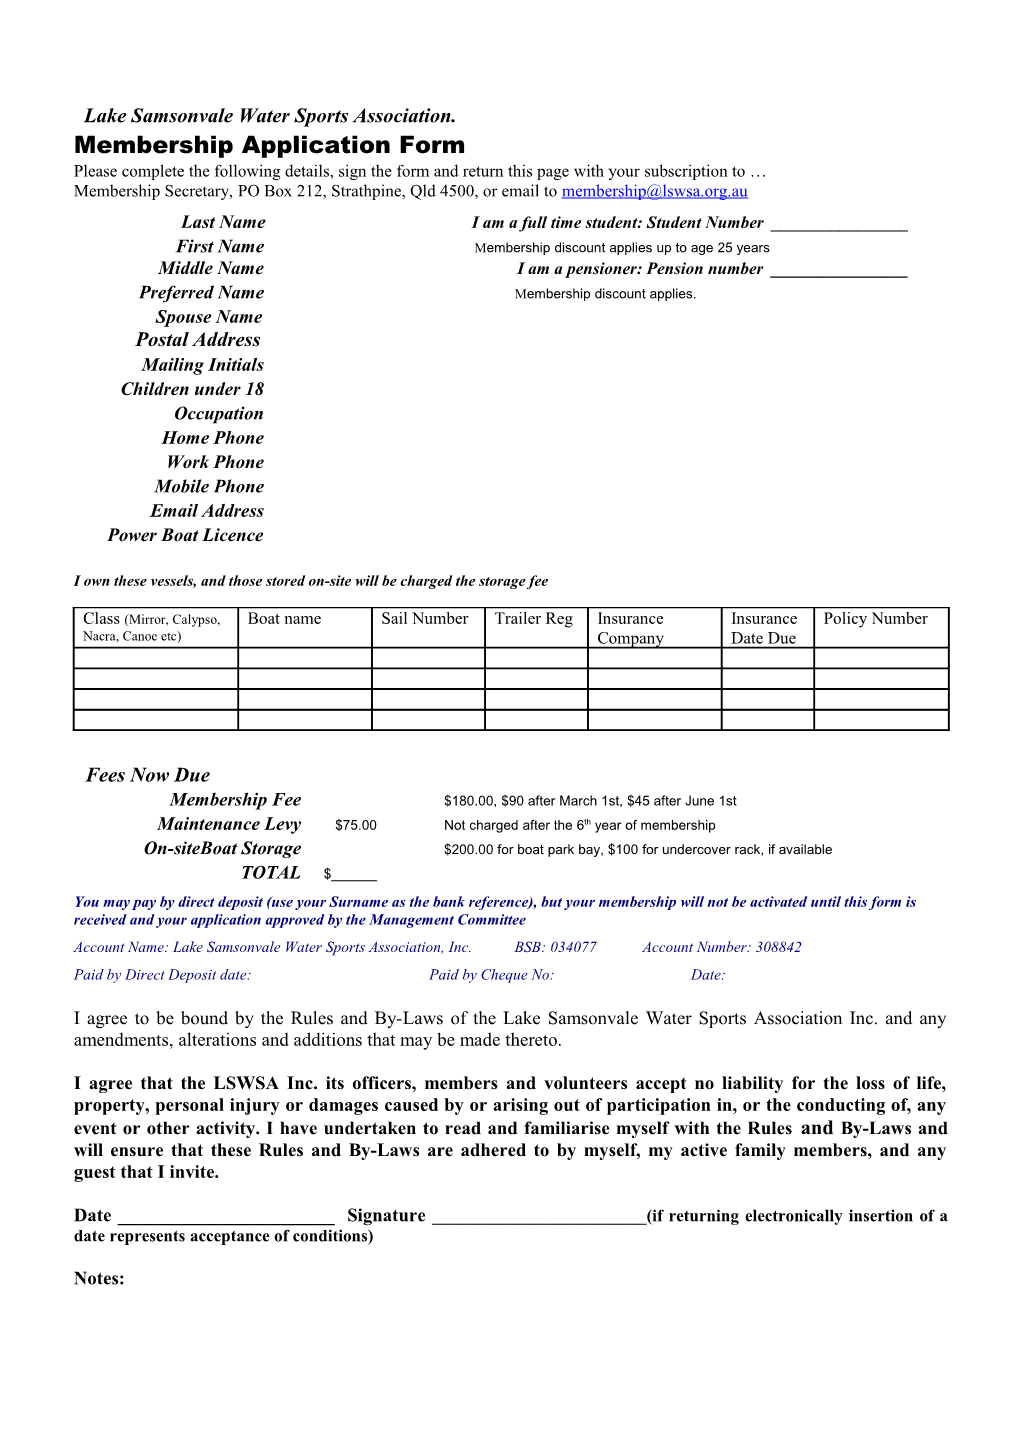 Lake Samsonvale Water Sports Association. Membership Application Form